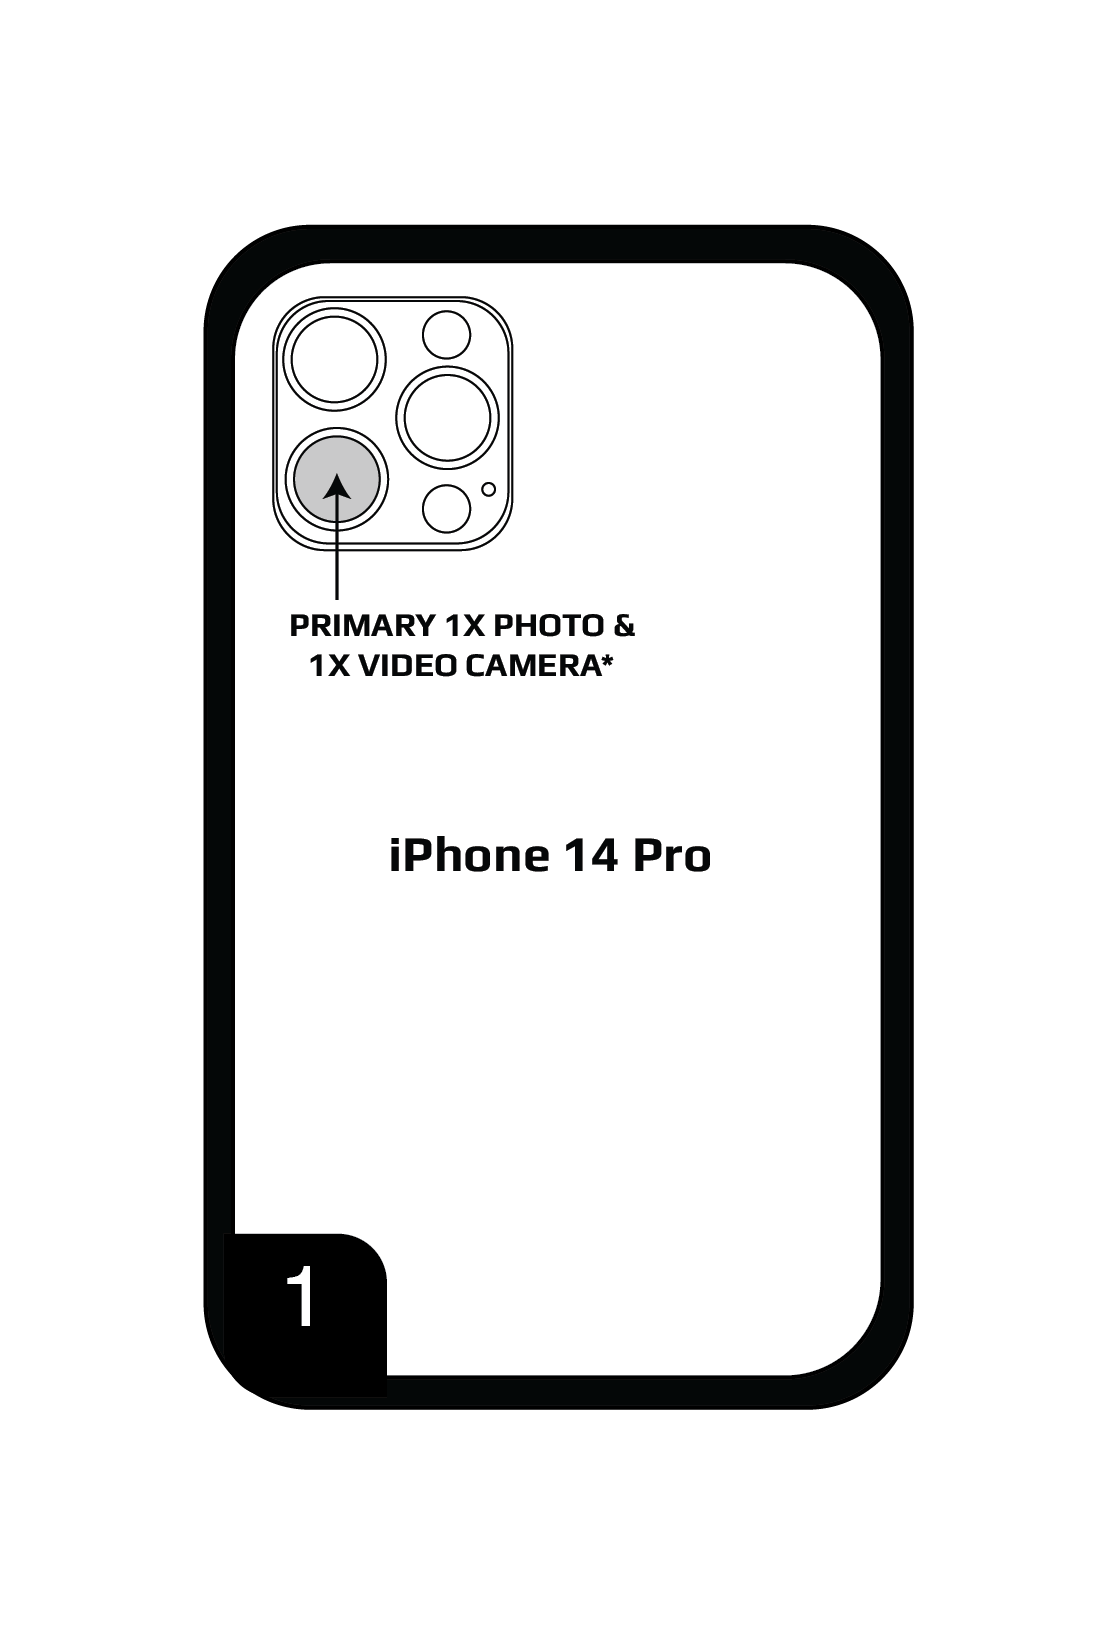 iPhone 14 pro camera step 1